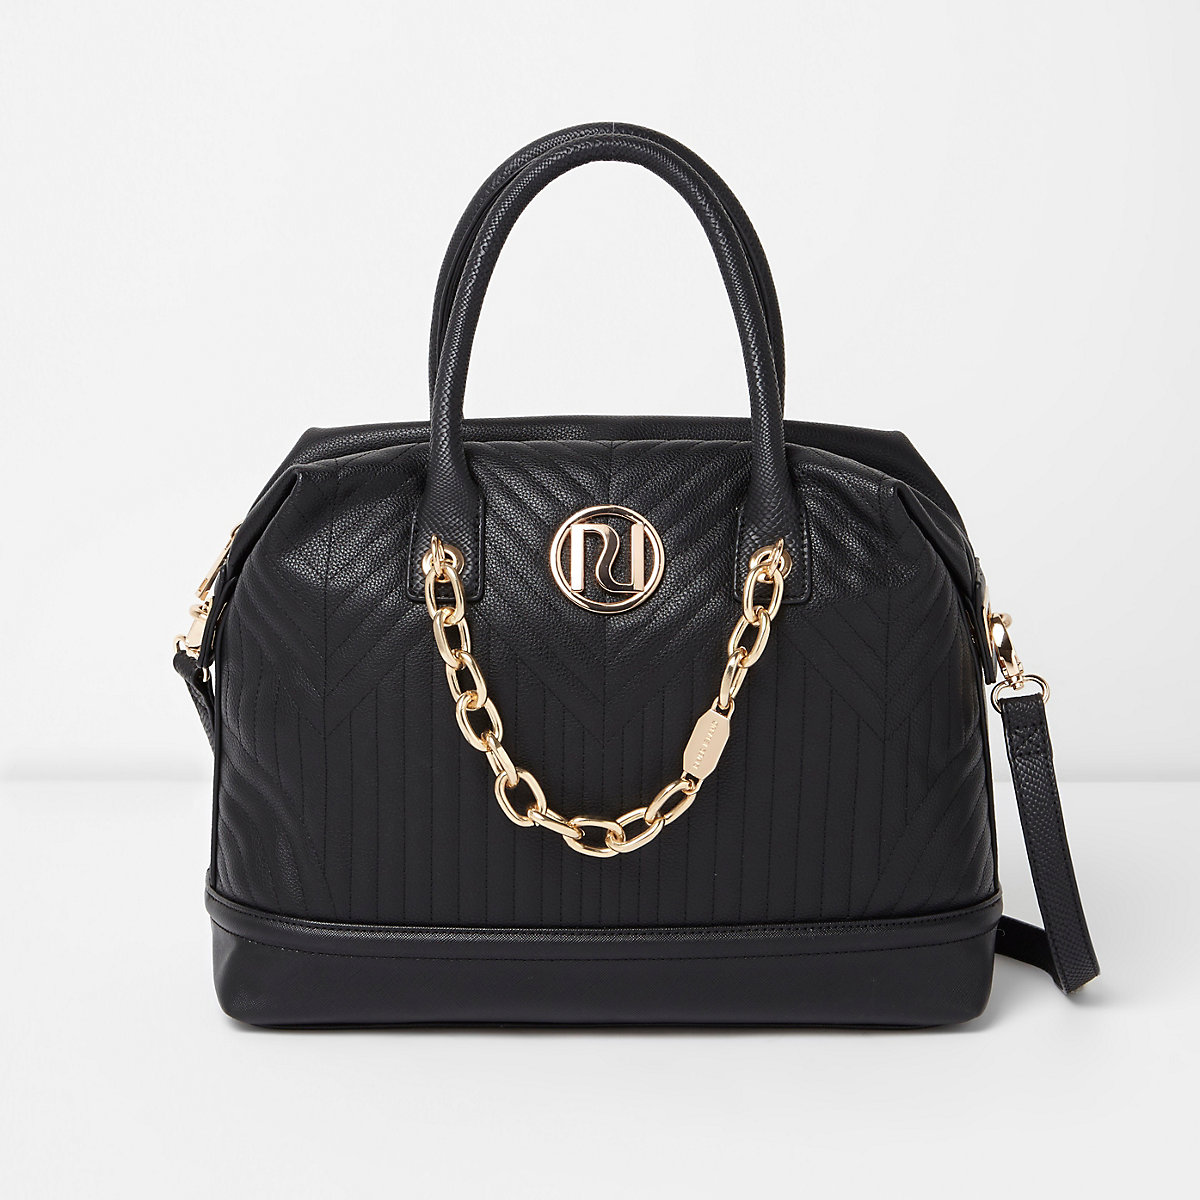 Black quilted chain detail bowler bag - Shopper & Tote Bags - Bags & Purses - women